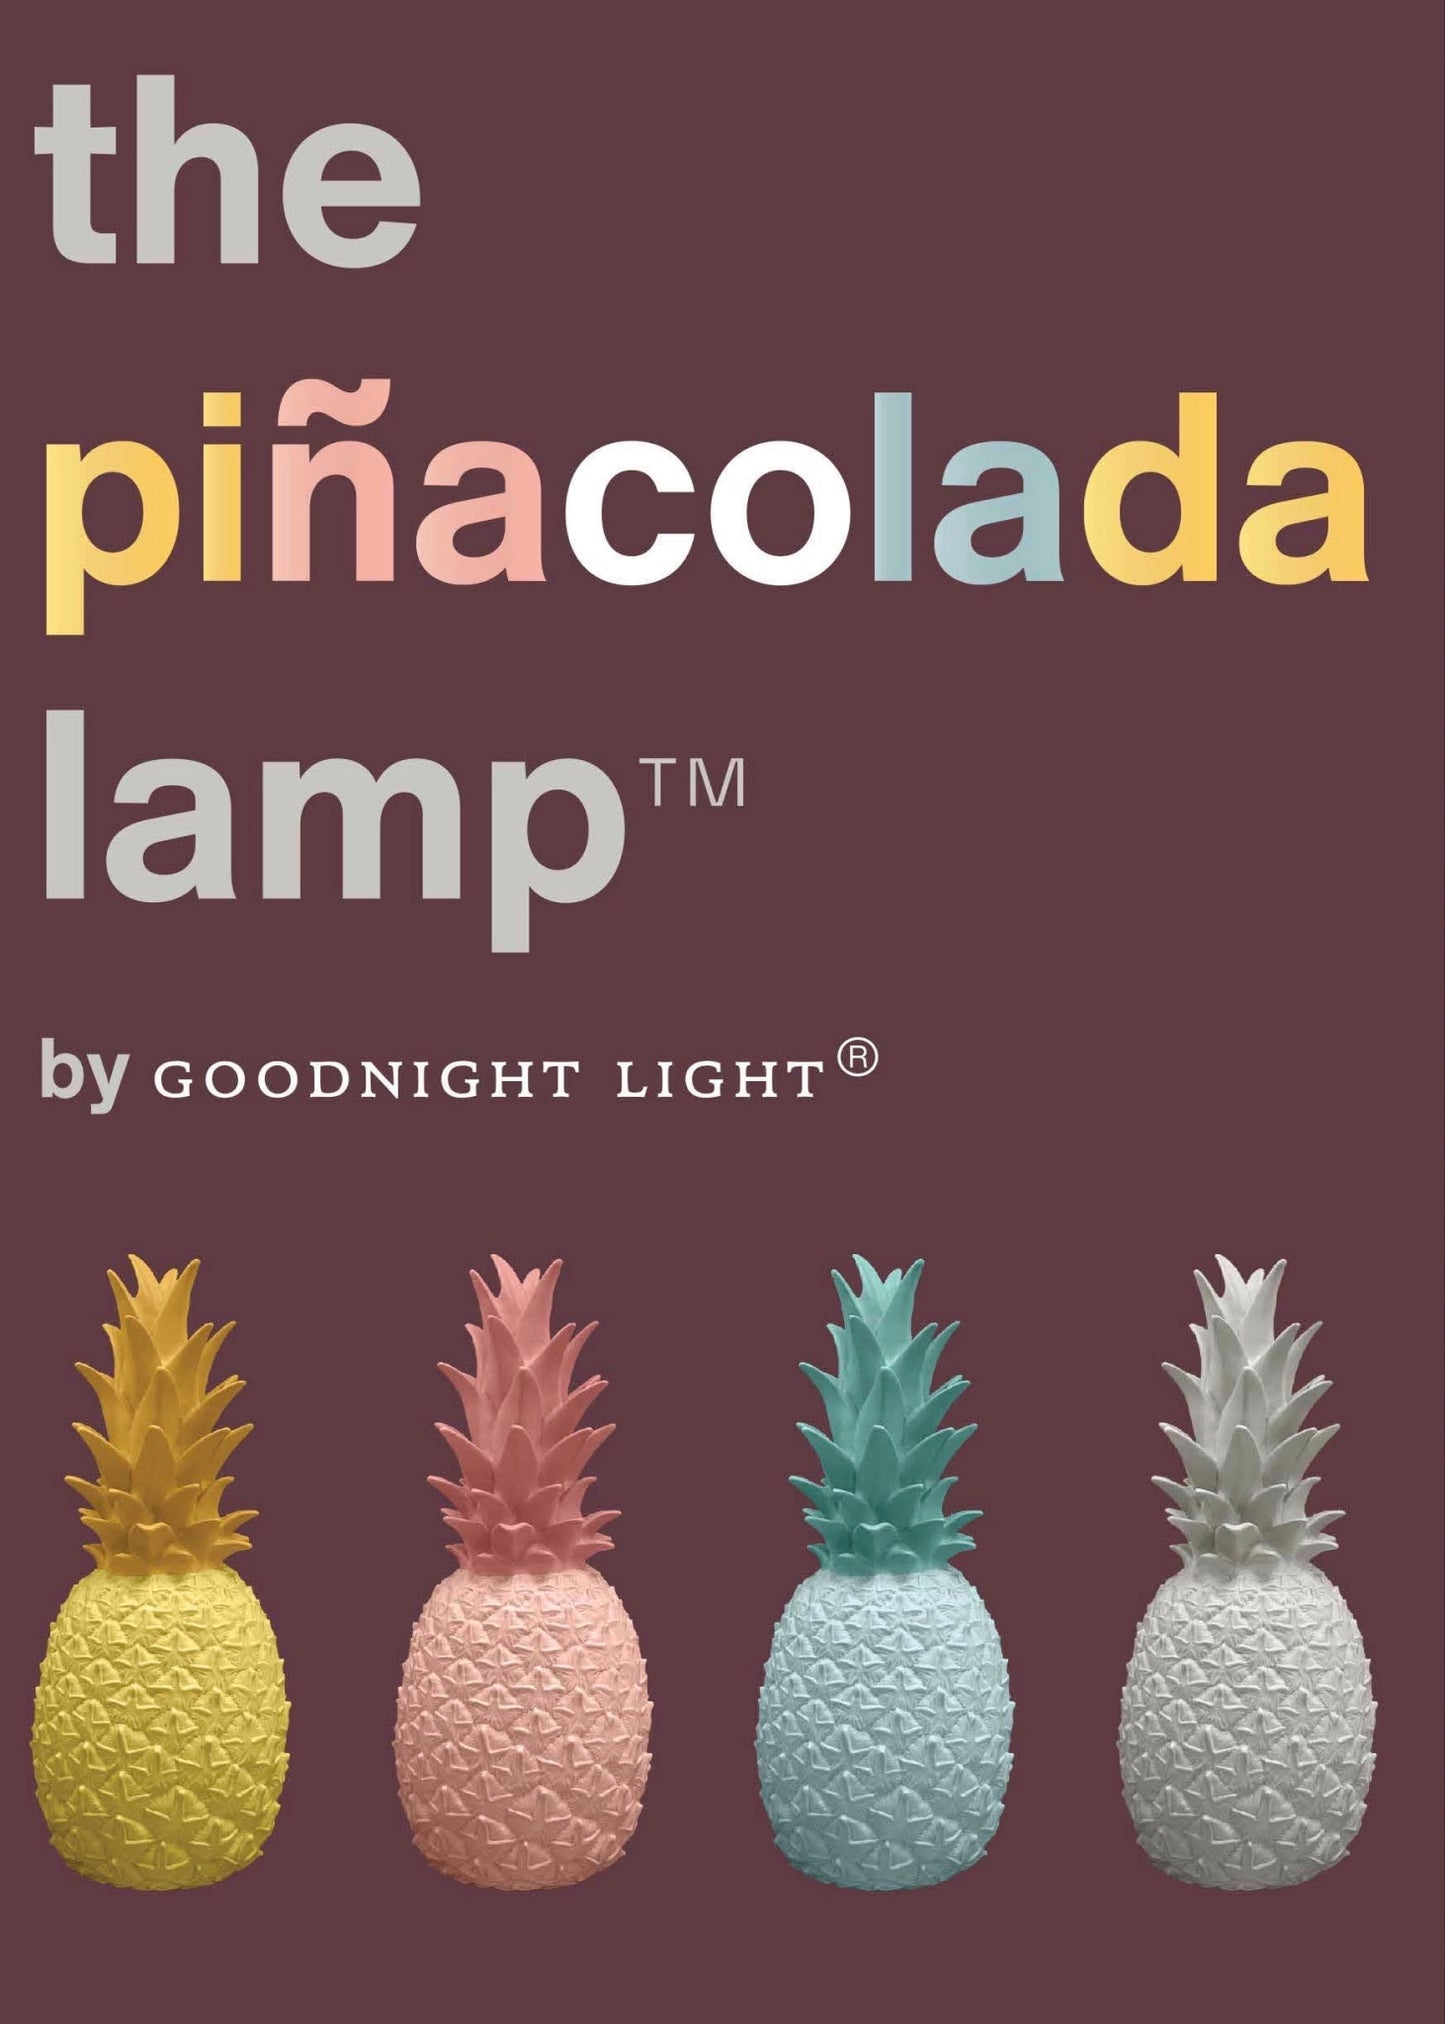 Standerlampe: "The Piña Colada"